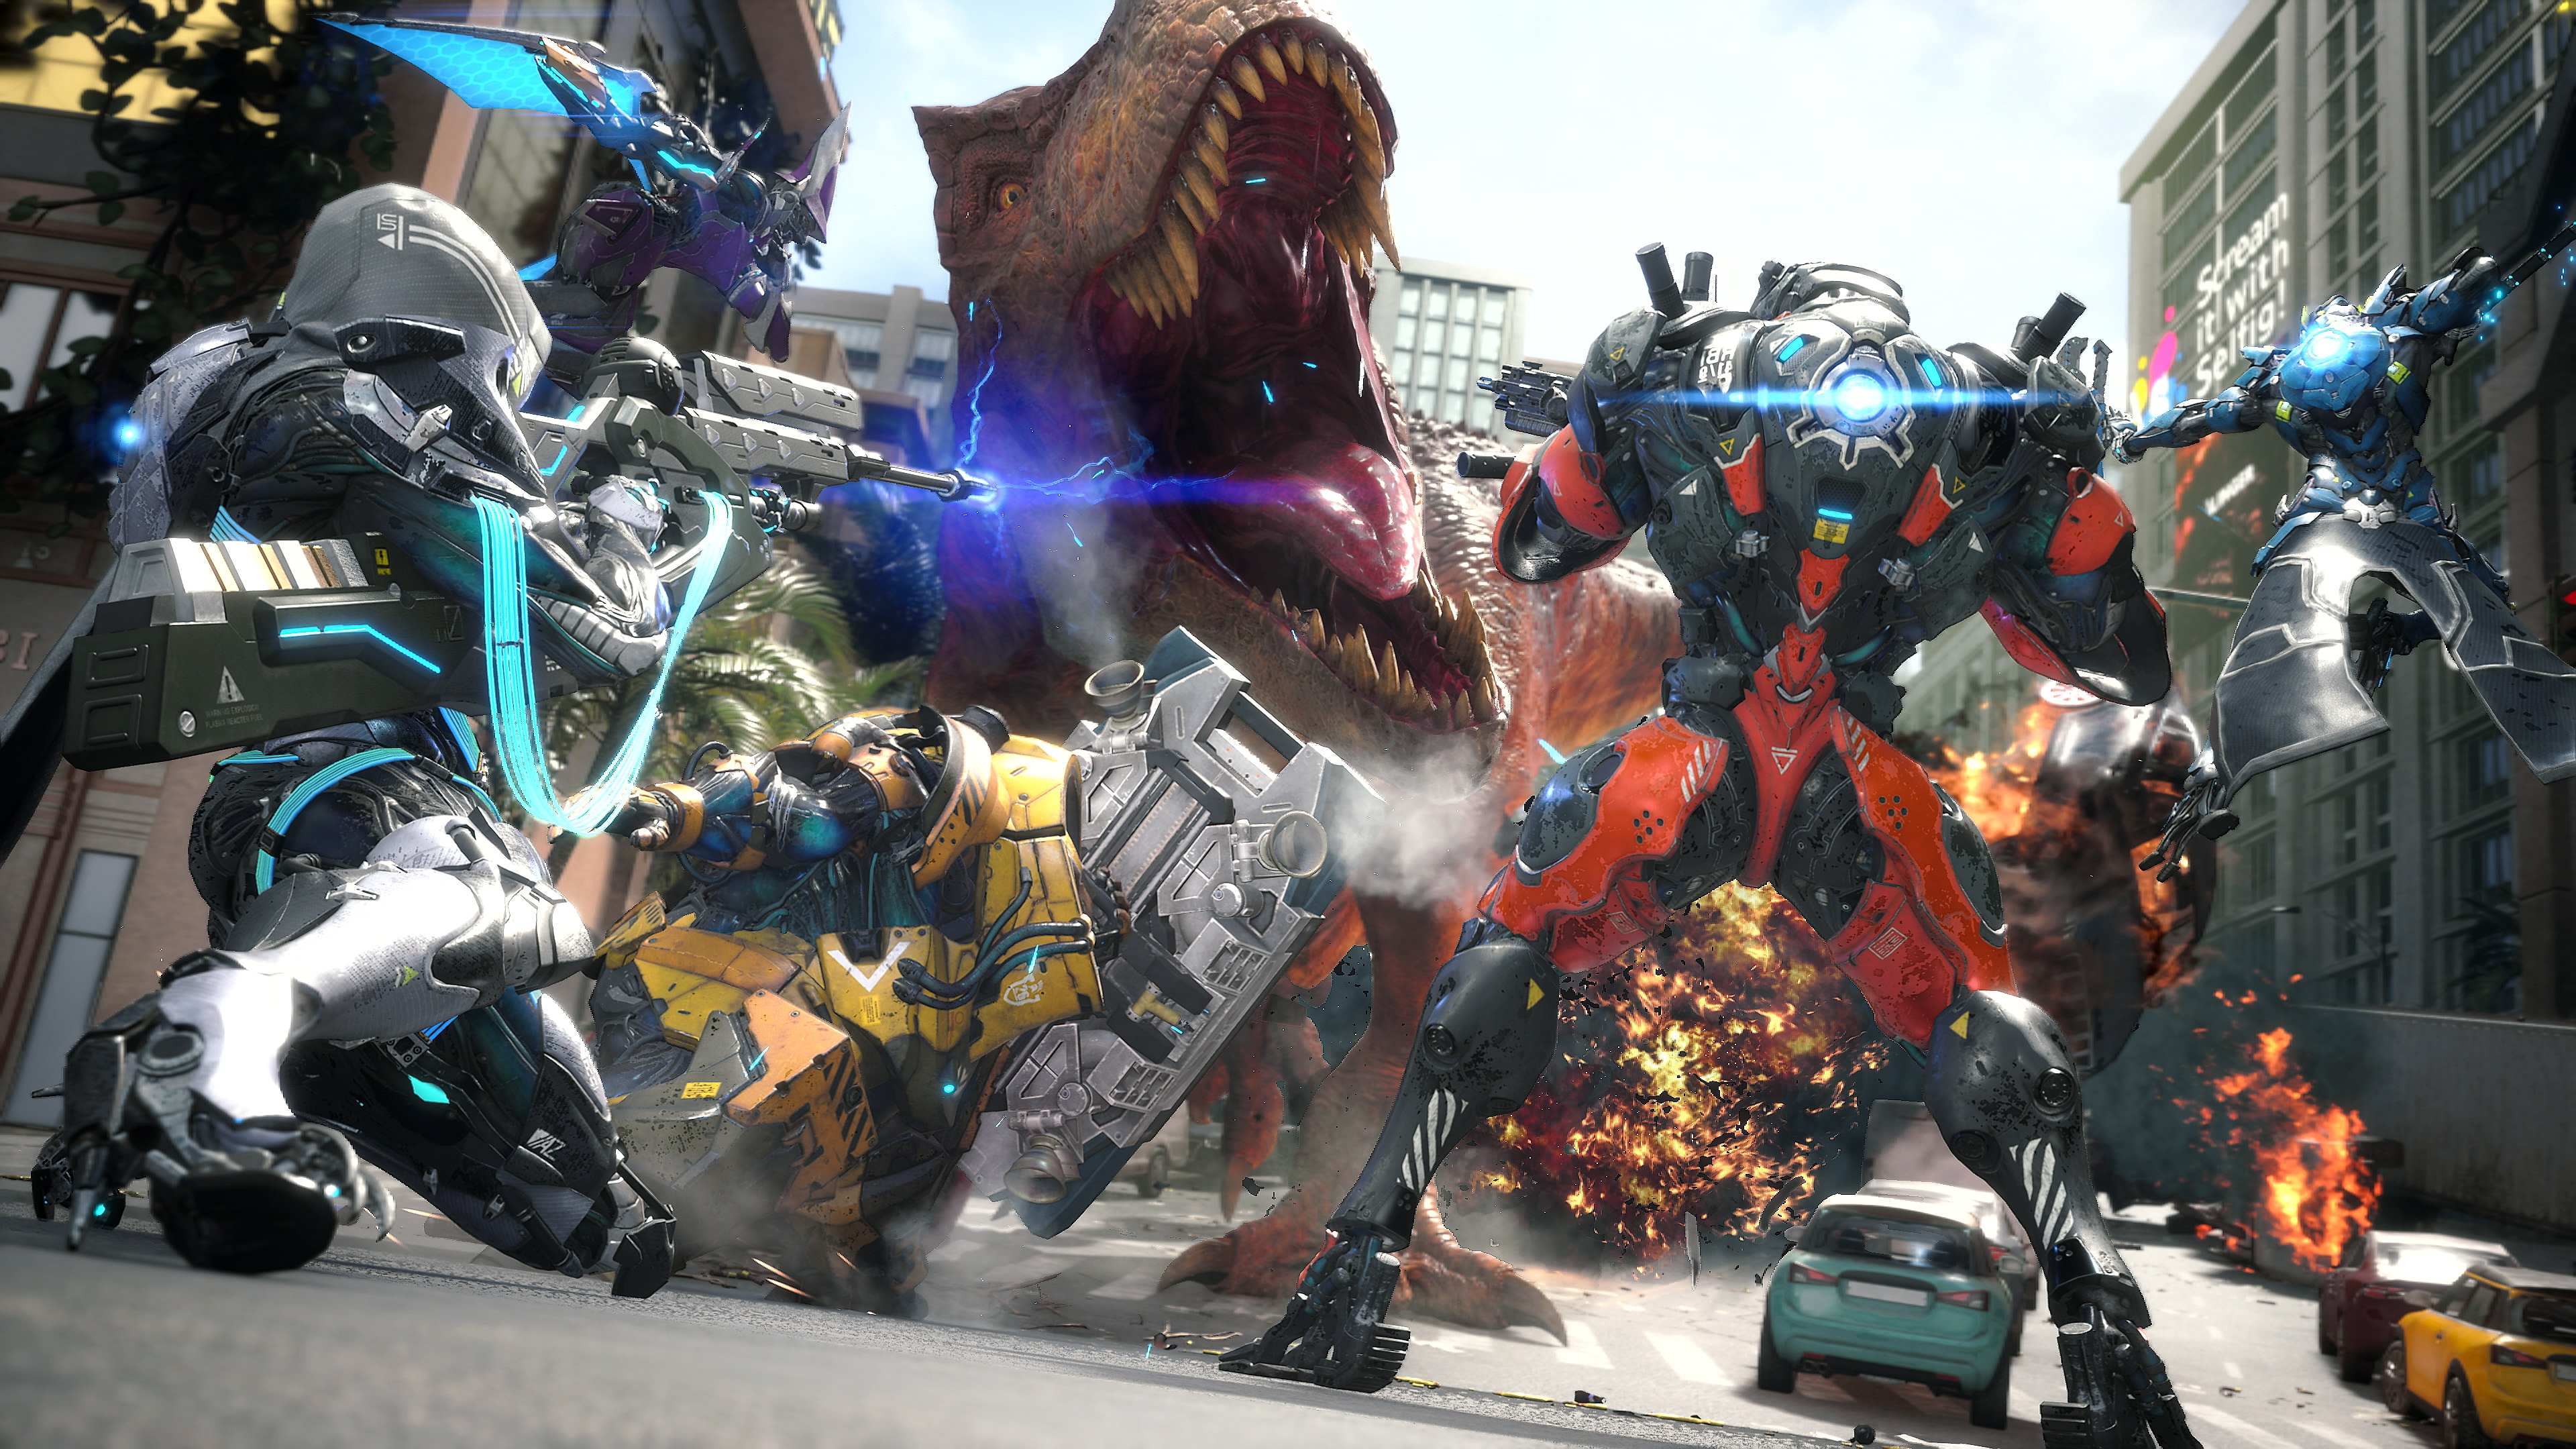 Captura de pantalla de Exoprimal en la que se muestra un tiranosaurio atacando a jugadores de aspecto mecánico conocidos como exoarmaduras